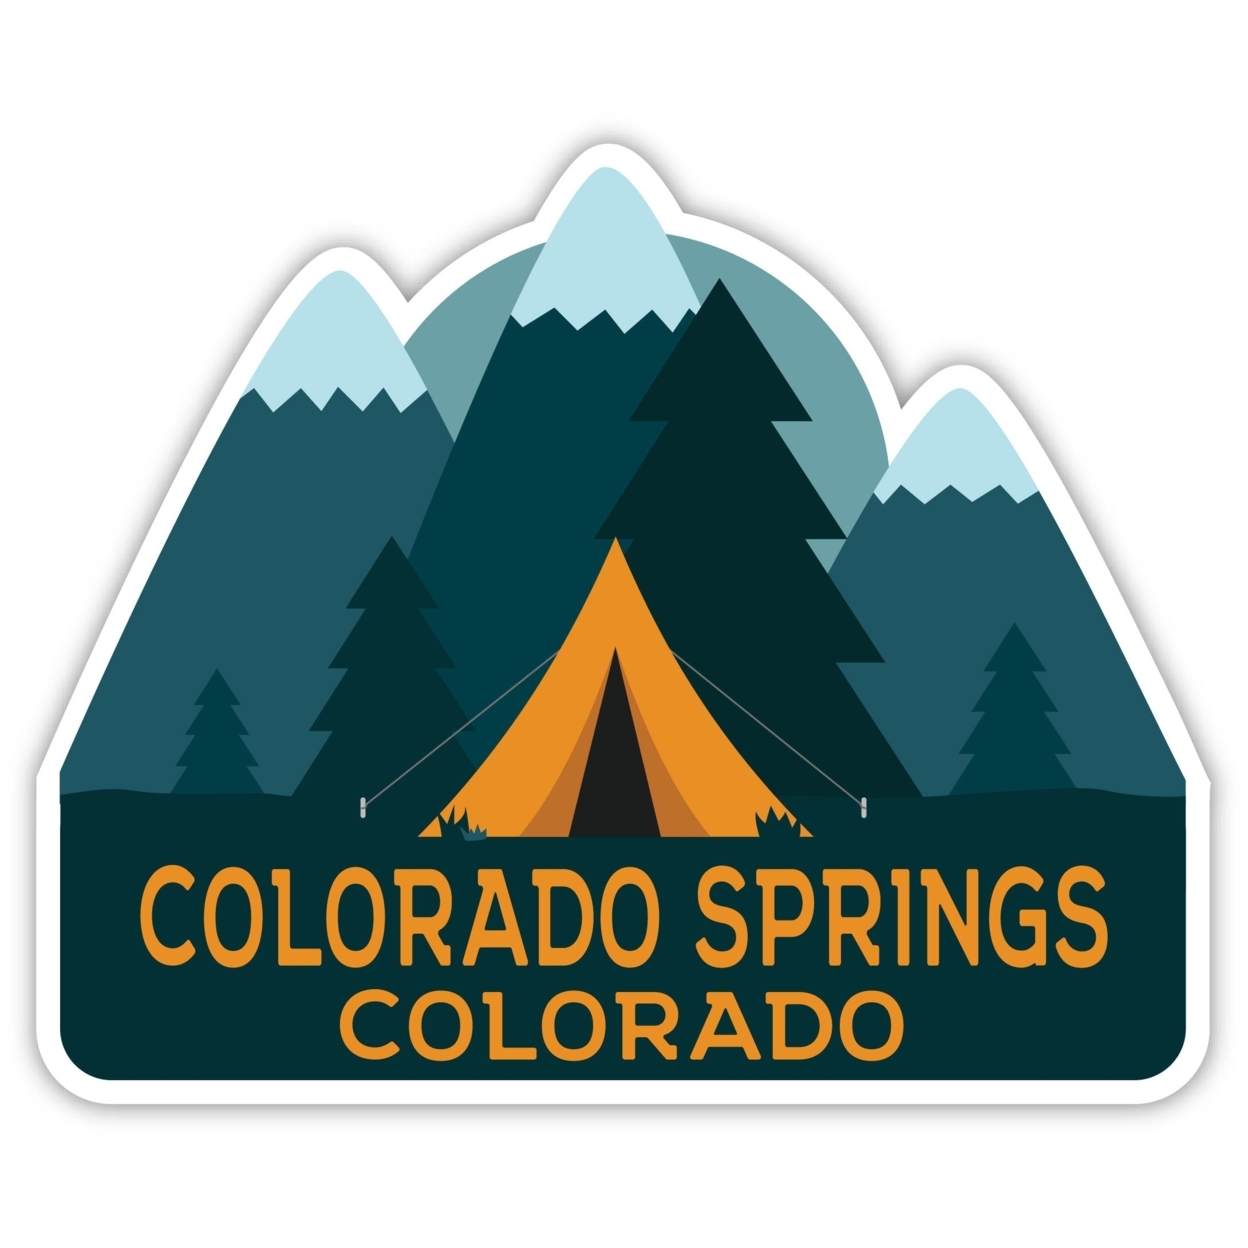 Colorado Springs Colorado Souvenir Decorative Stickers (Choose Theme And Size) - 4-Pack, 10-Inch, Tent